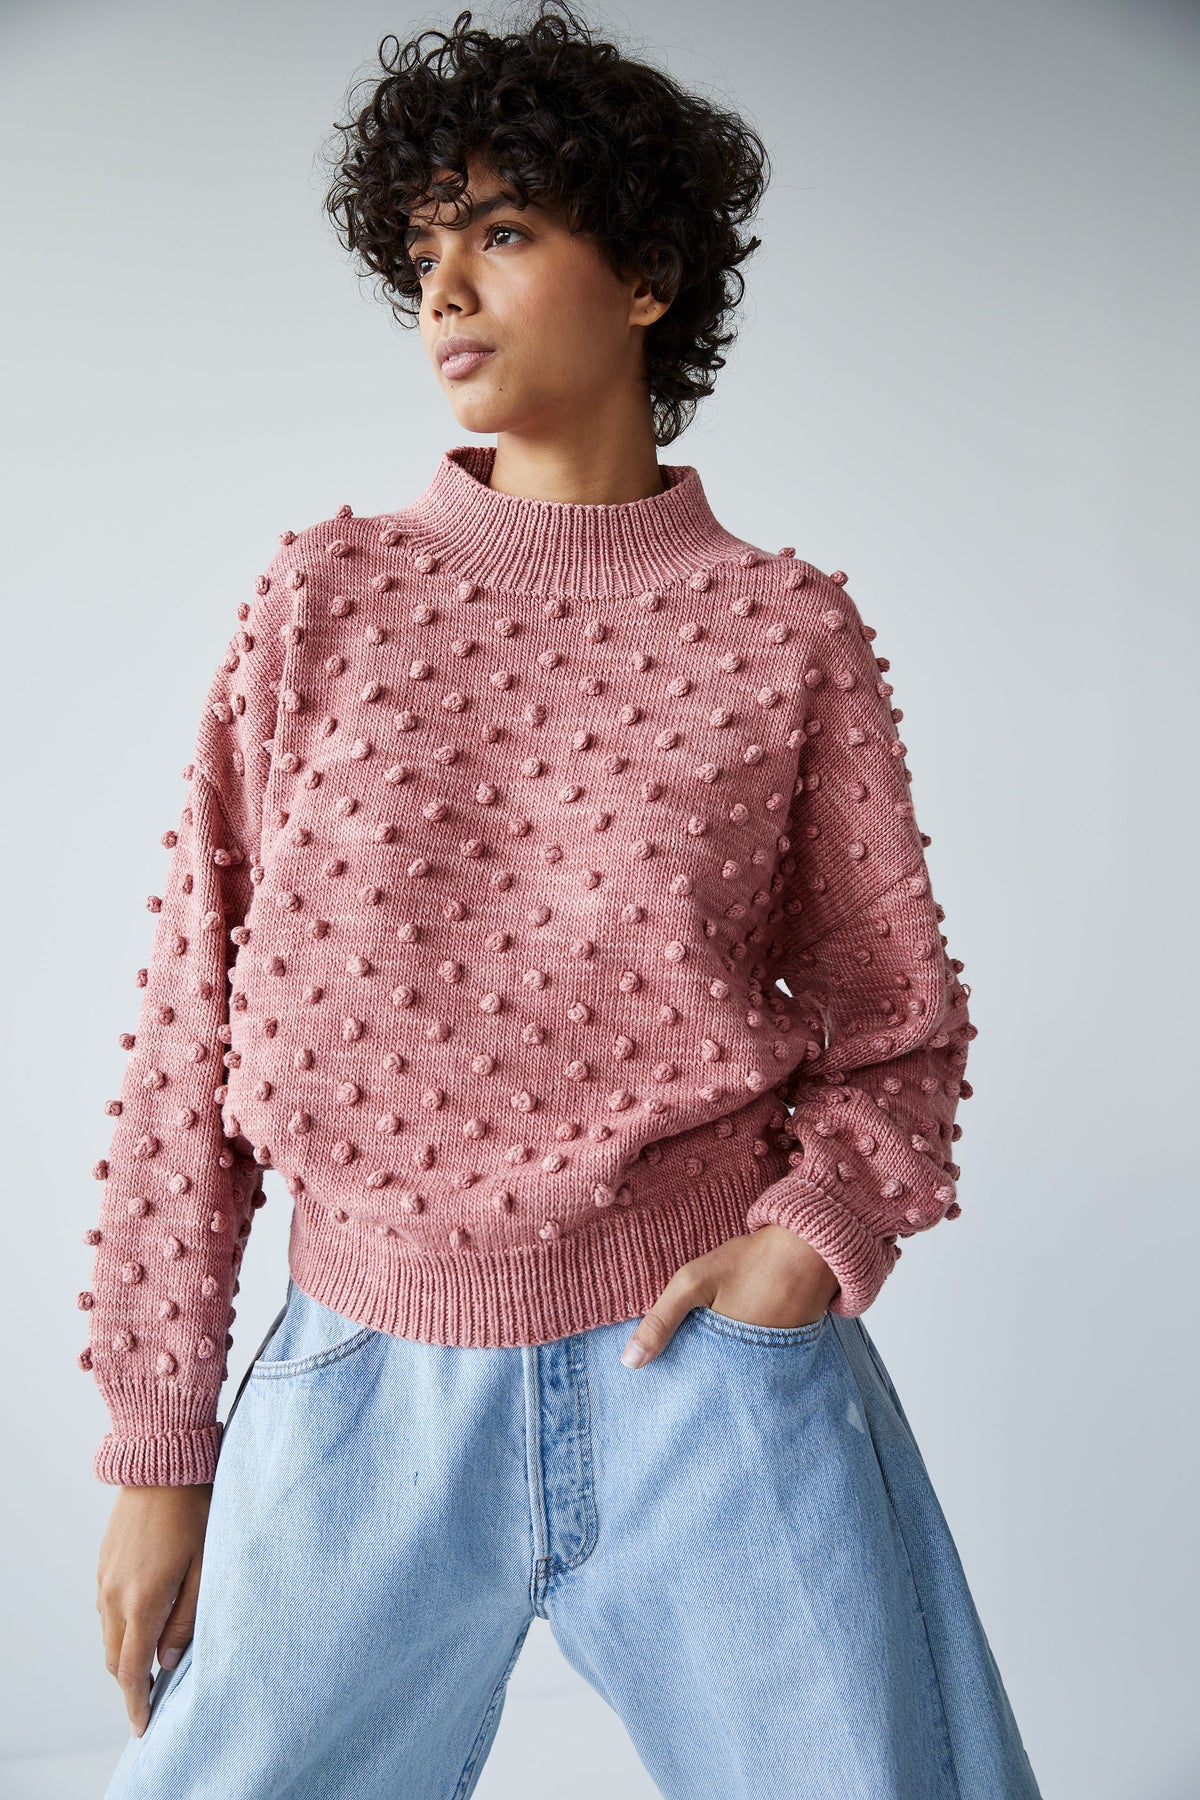 Adult Popcorn Sweater - Rose Blush